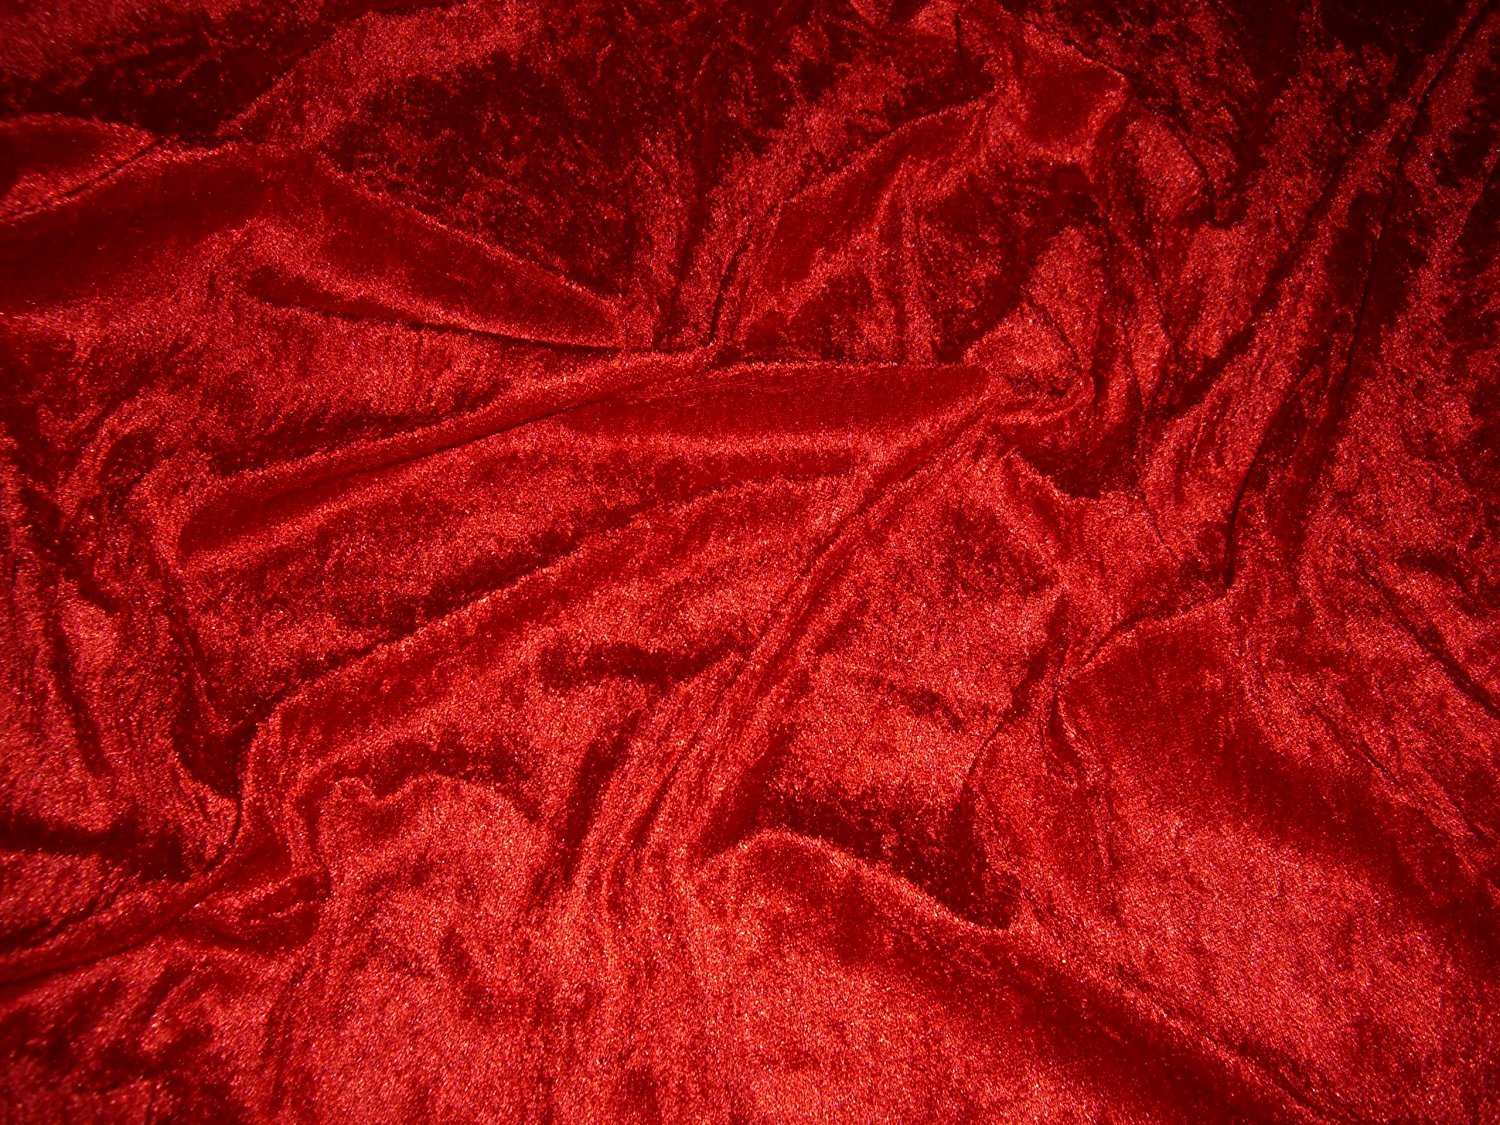 https://thimblesfabricsncrafts.co.uk/wp-content/uploads/2018/10/Red-Crushed-Velour-Velvet-Fabric-Stretch-Material-Velour-Fabric-Japnese-Qkt-4000.jpg